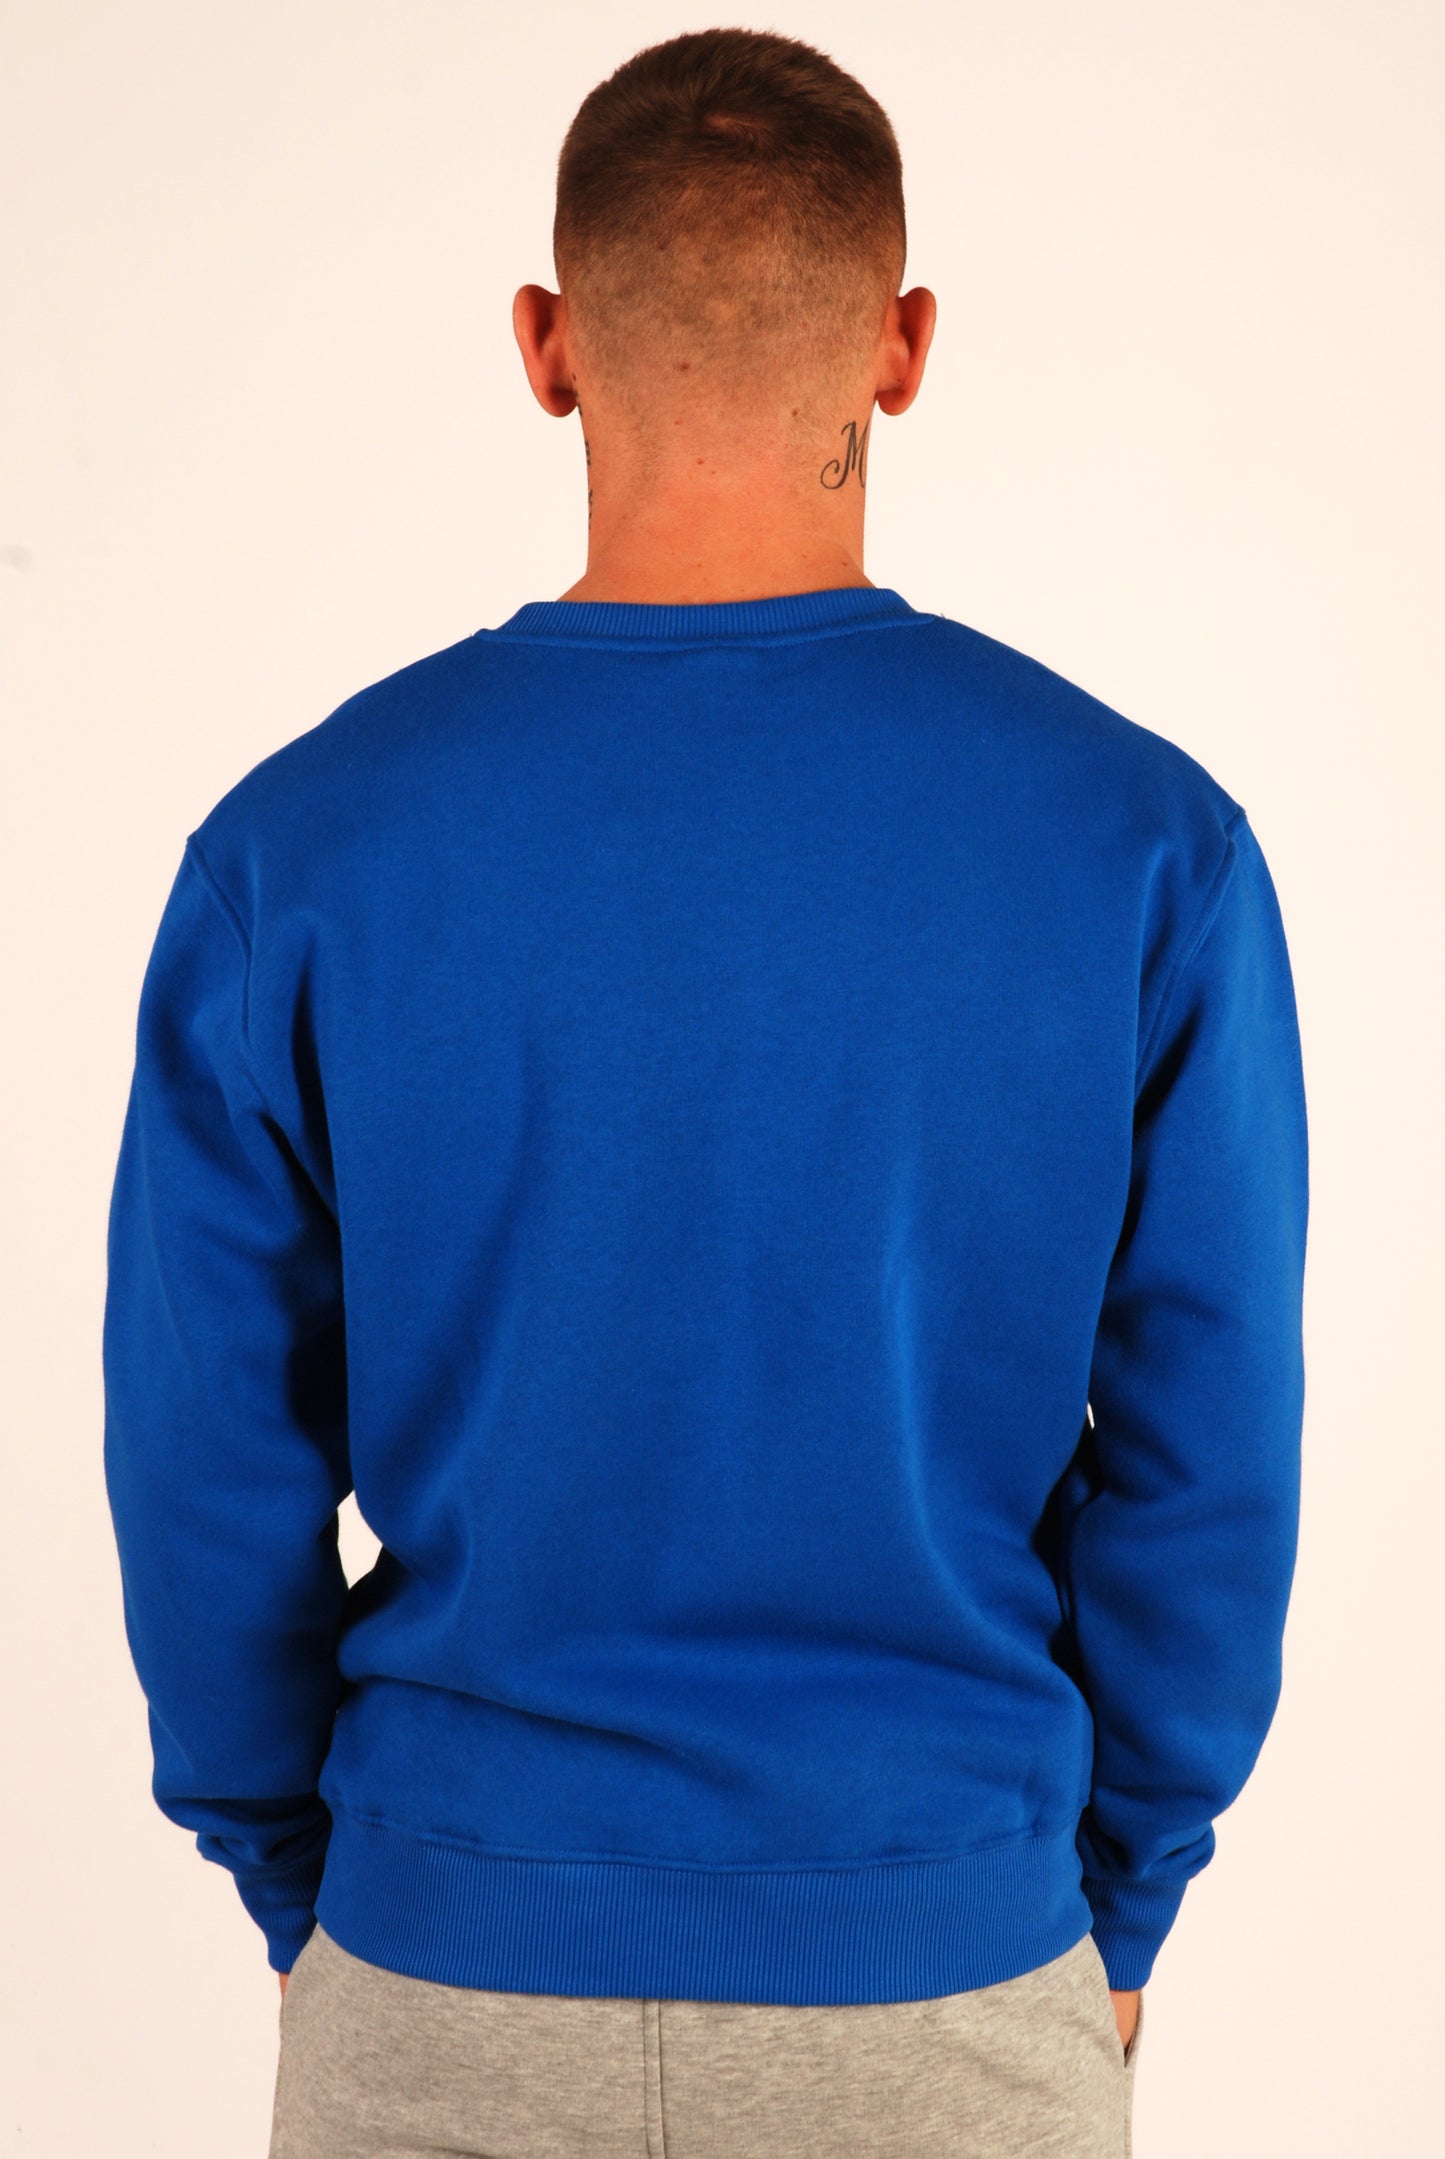 KRONK One Colour Gloves Towelling Applique Logo Sweatshirt Loose Fit Royal Blue